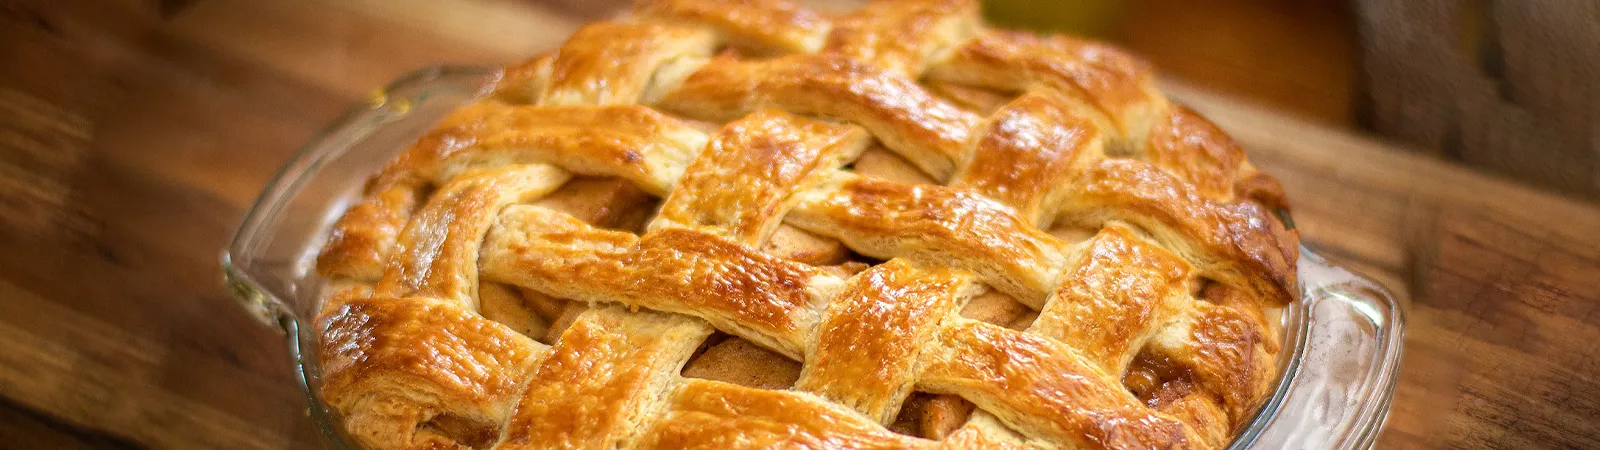 1 Apple pie - Best Traditional American Foods